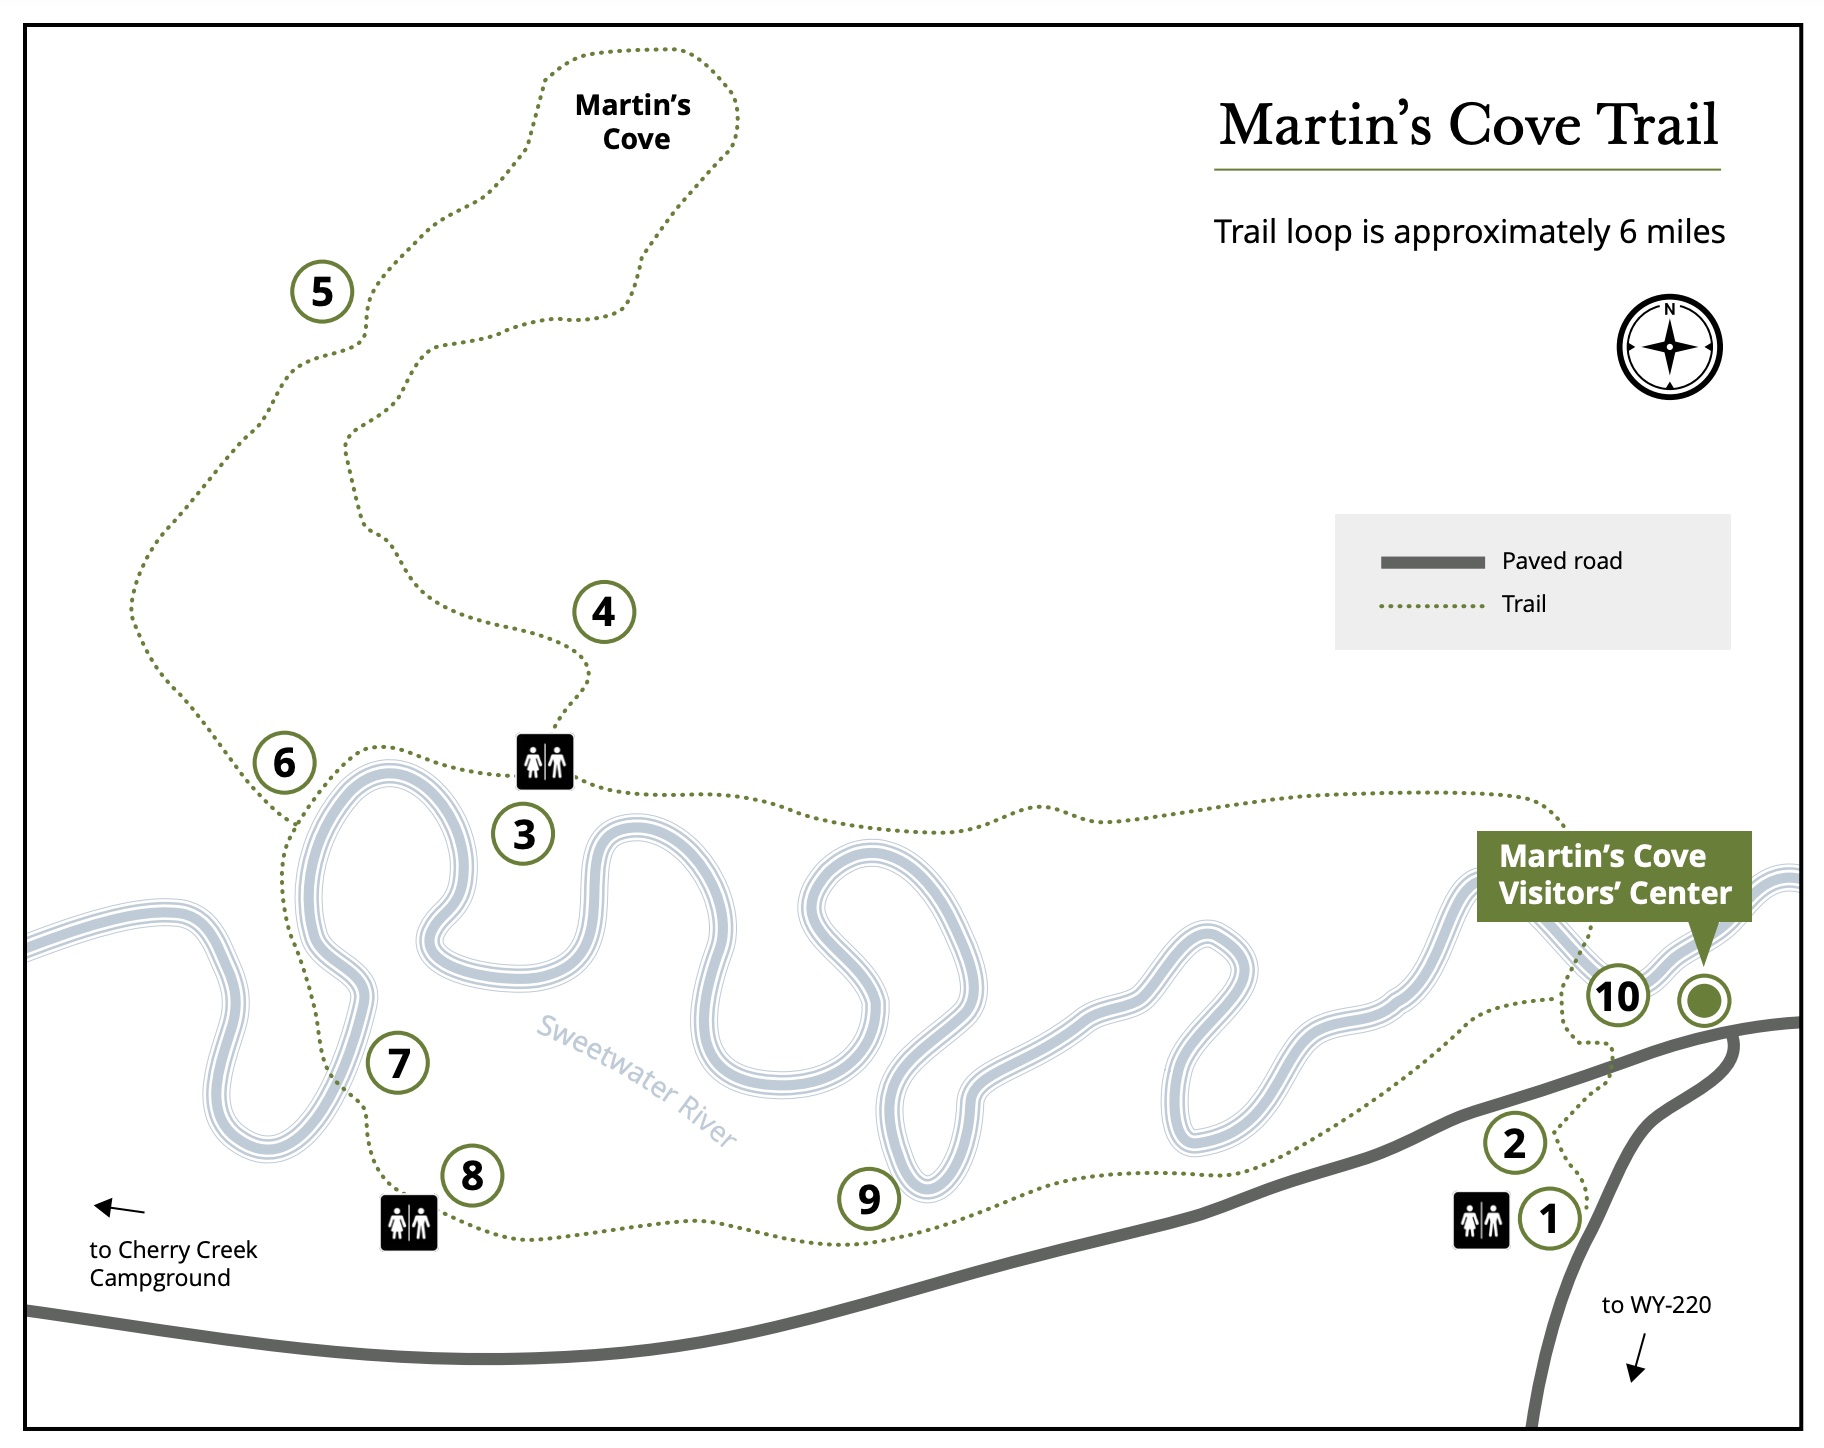 martin's_cove_trail.jpg